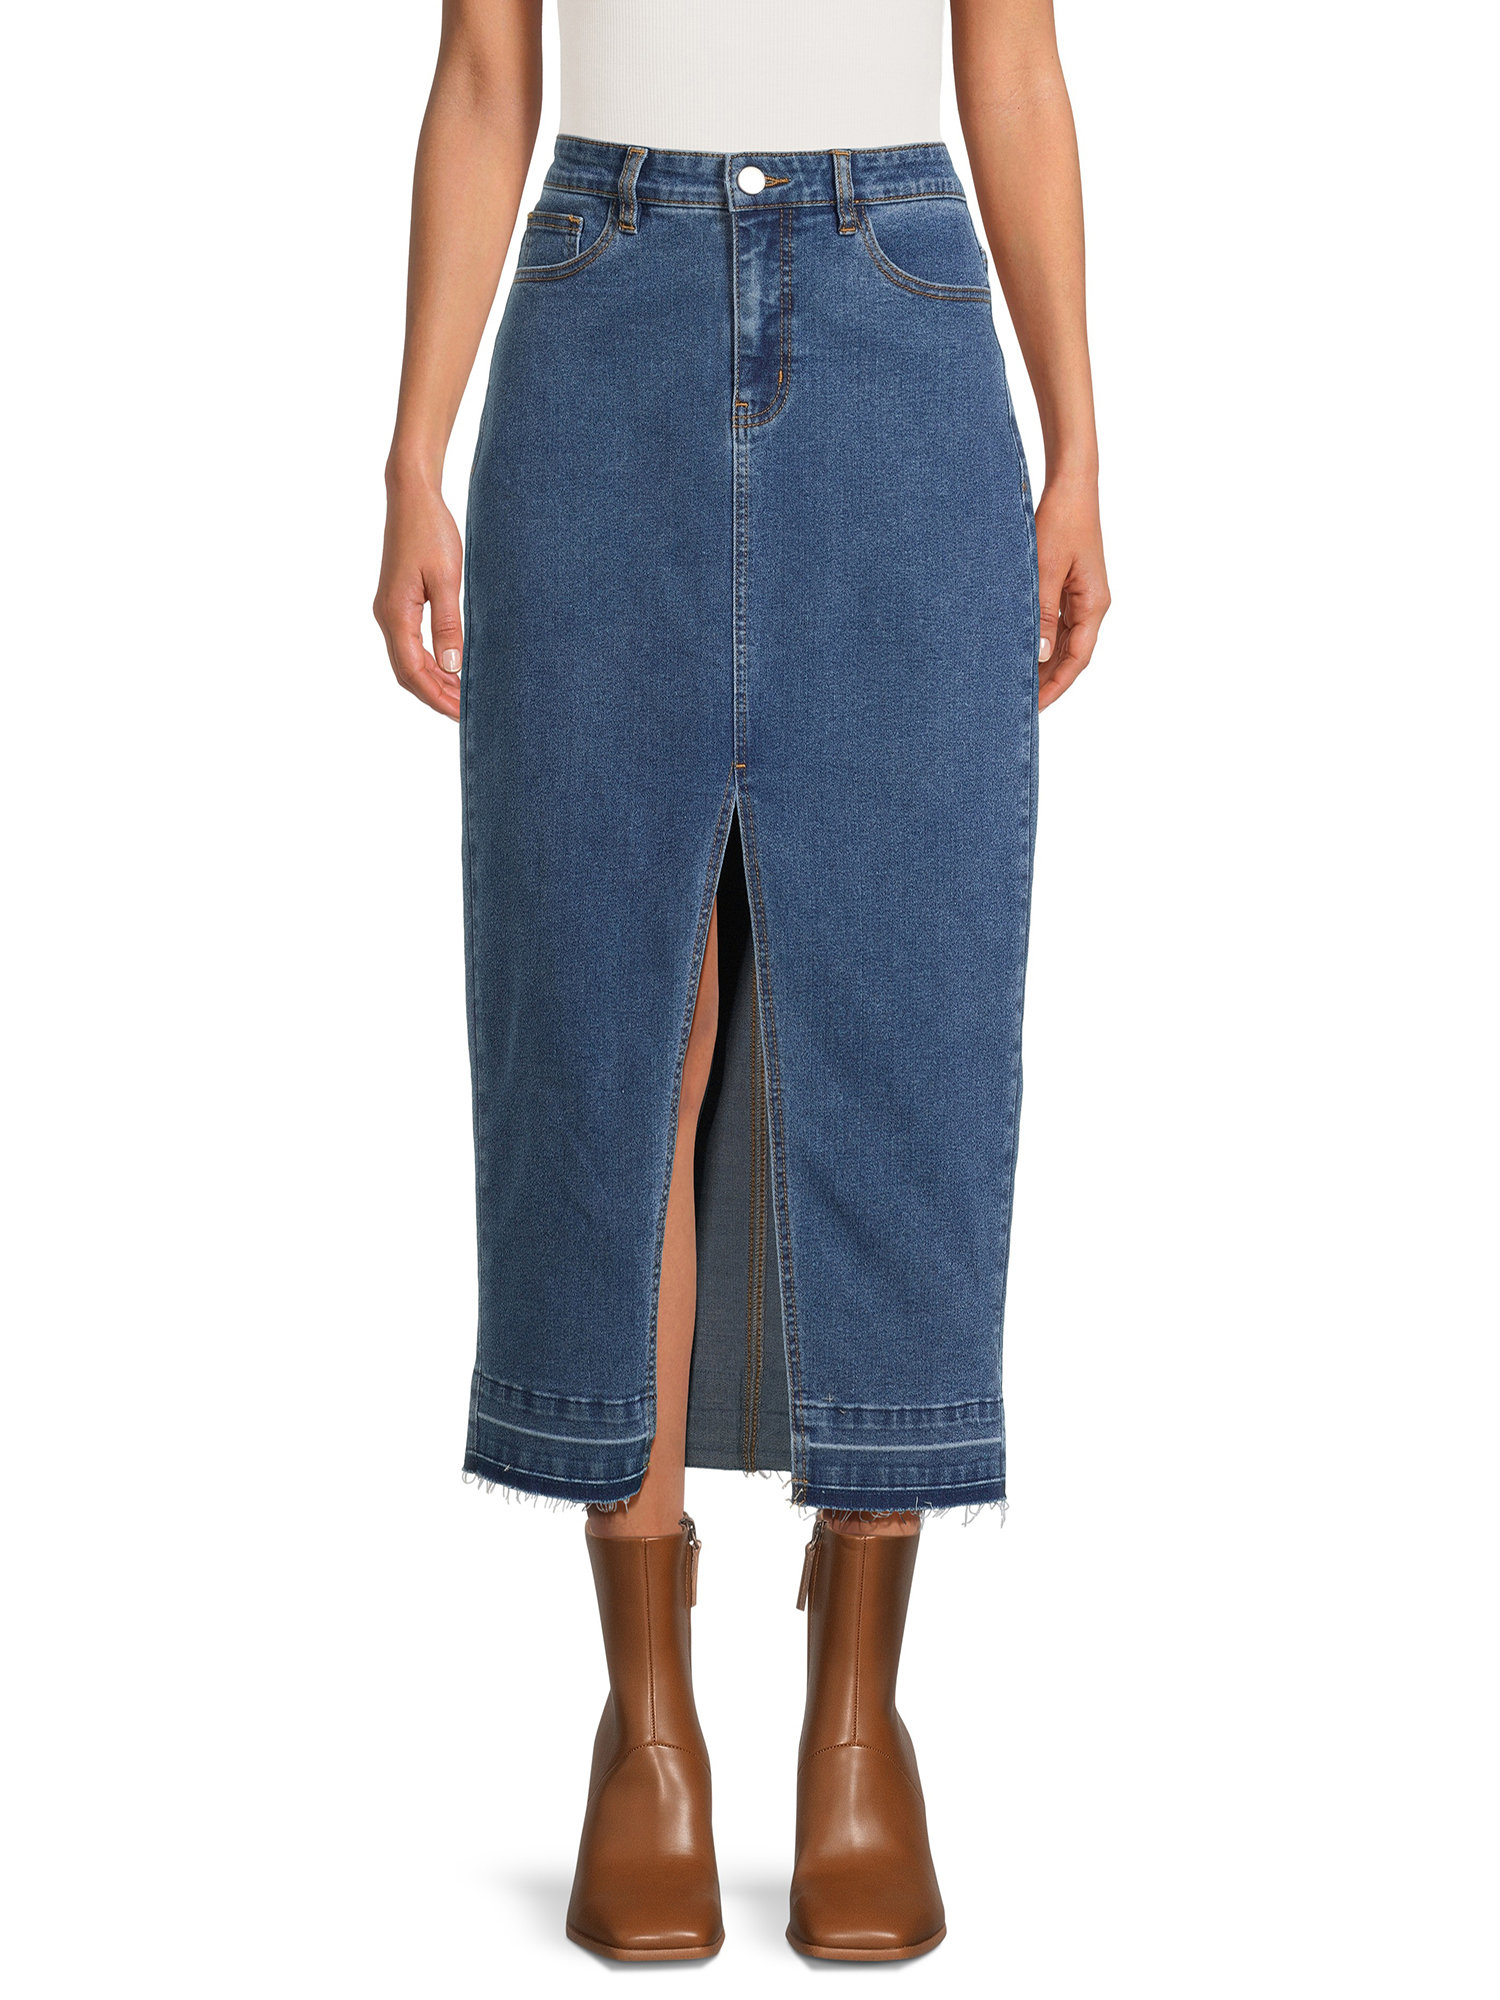 Liv & Lottie Juniors Denim Skirt with Slit, Sizes S-XL - Walmart.com